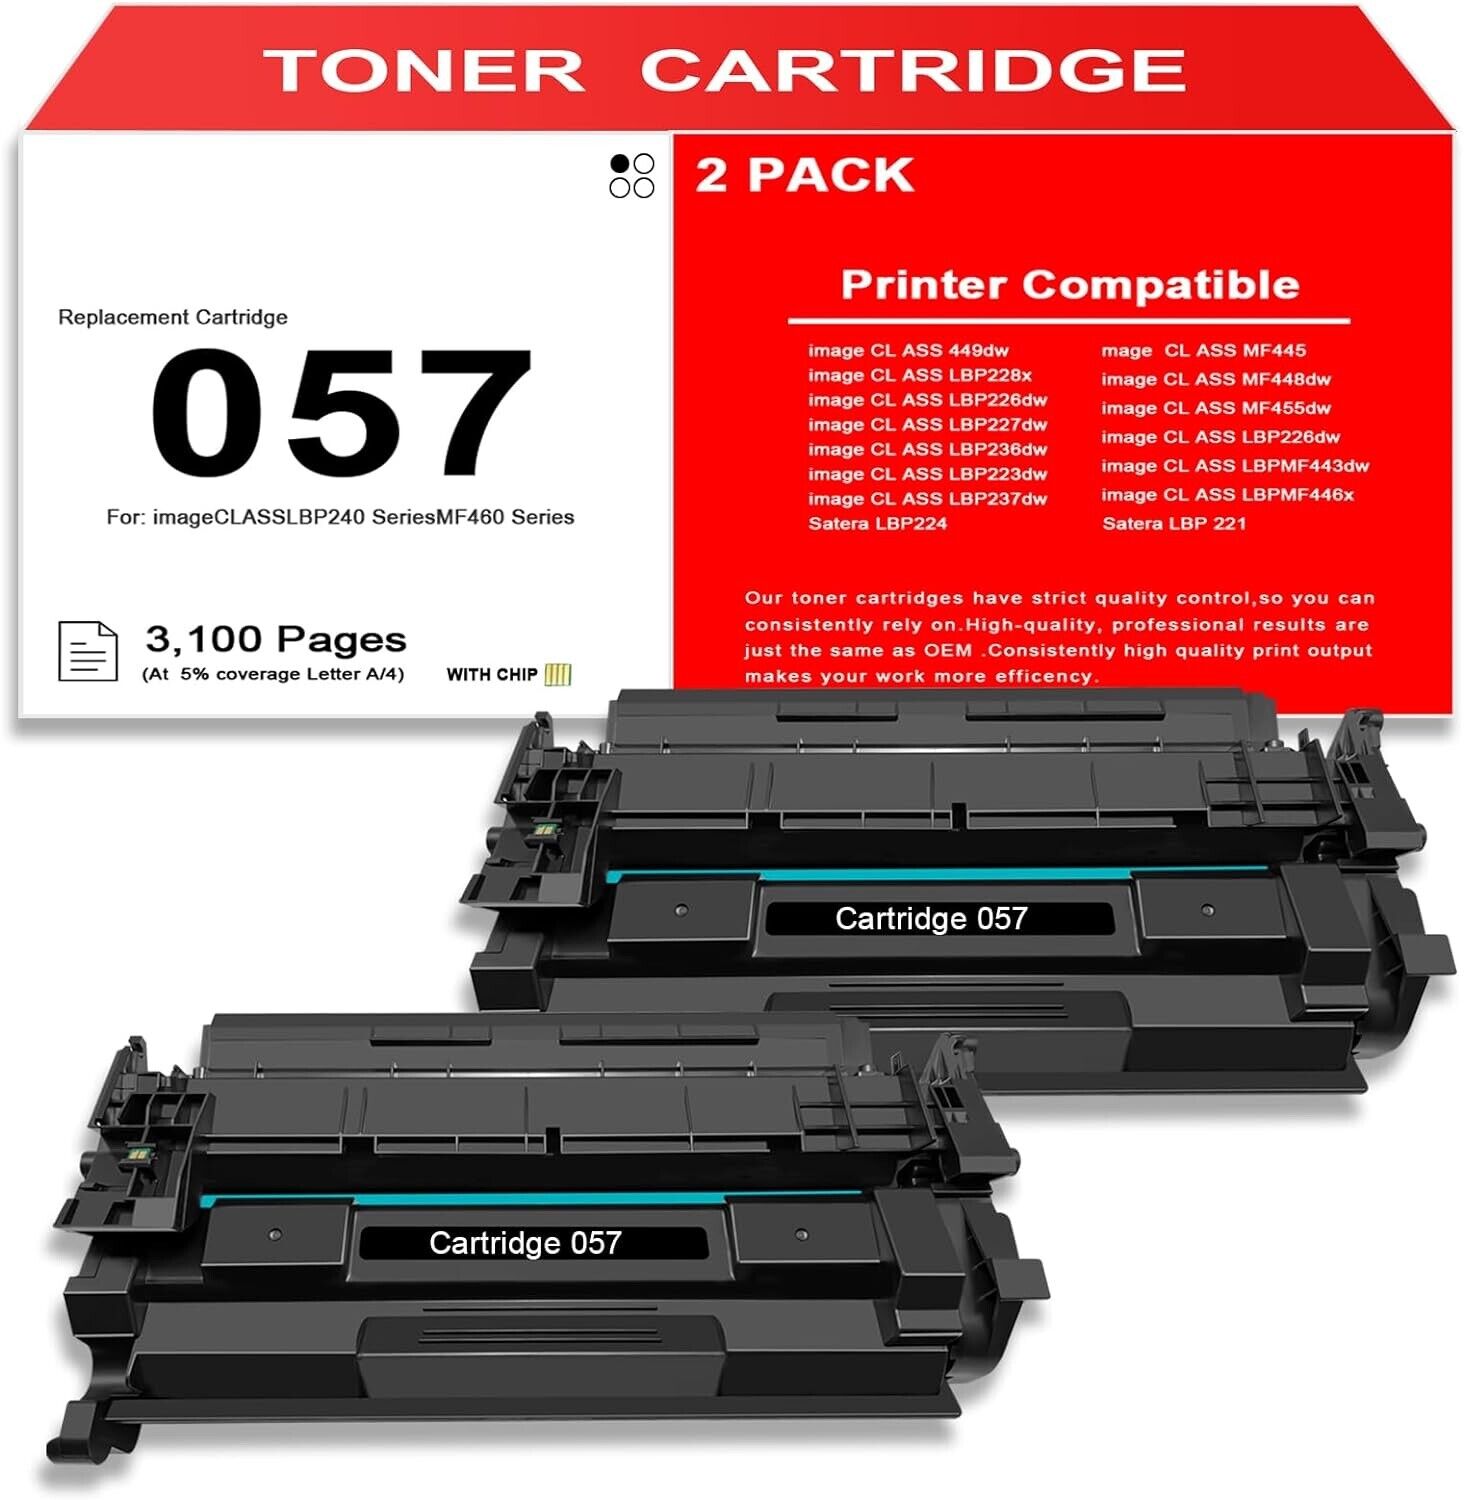 Get Crisp Prints with 2-Pack Canon 057 Compatible Toner MF445dw MF448dw MF449dw